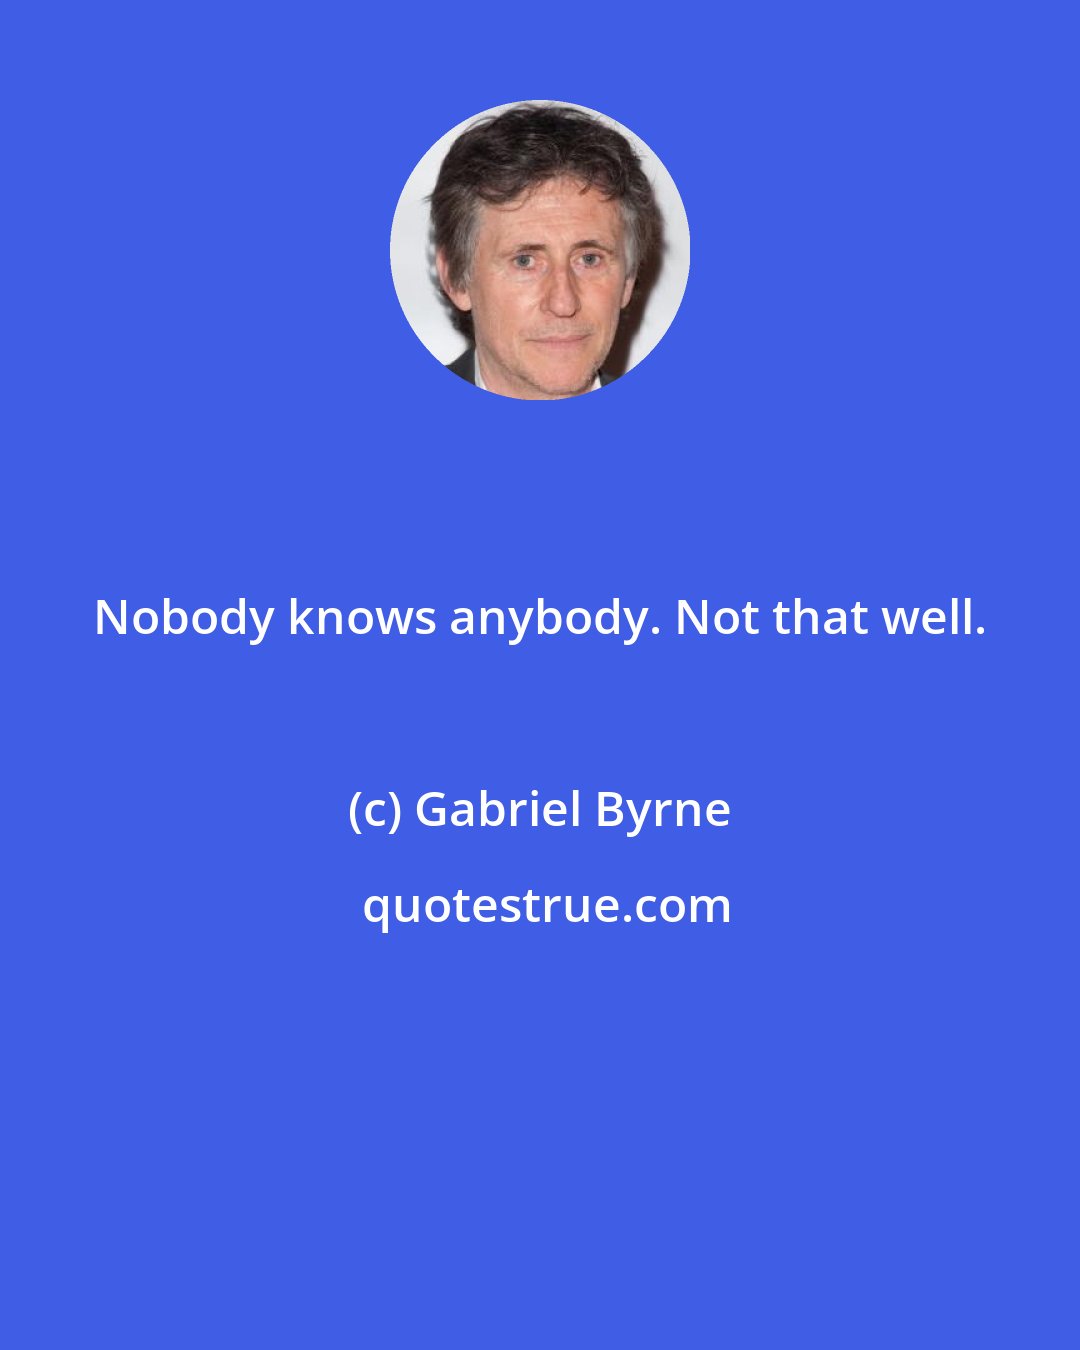 Gabriel Byrne: Nobody knows anybody. Not that well.